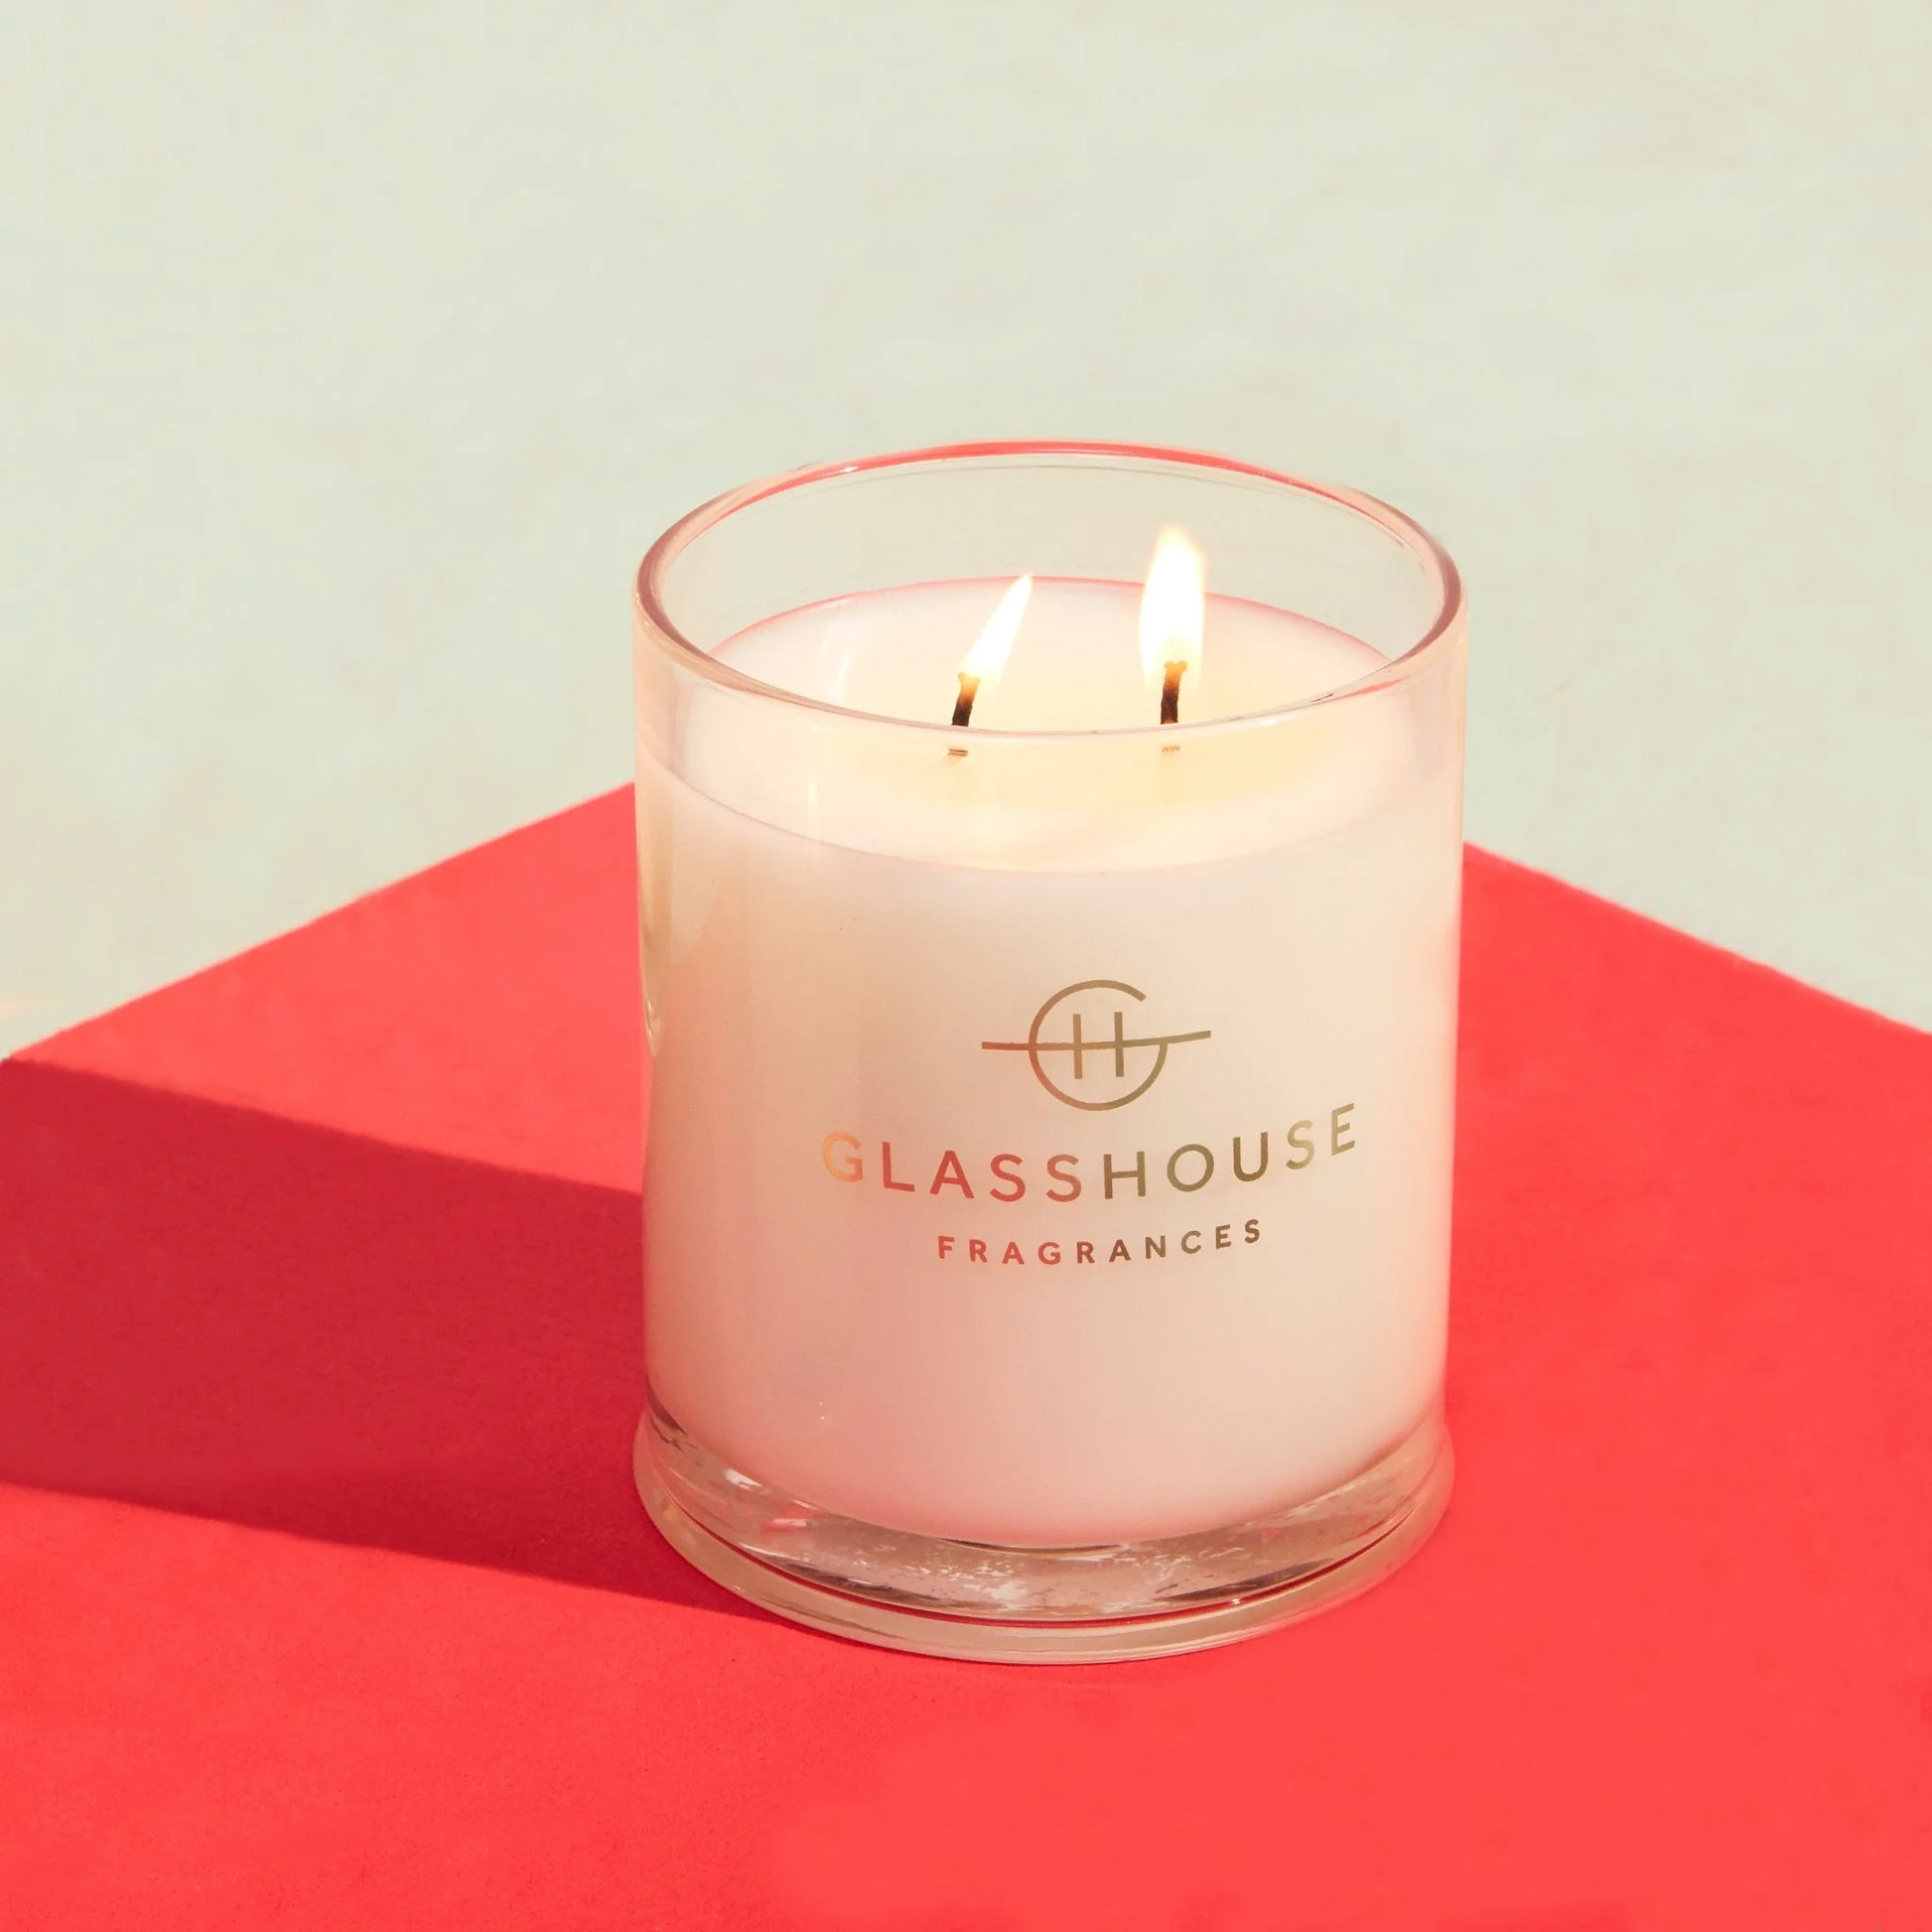 Rendezvous - 13oz Candle Perfume Glasshouse Fragrances   